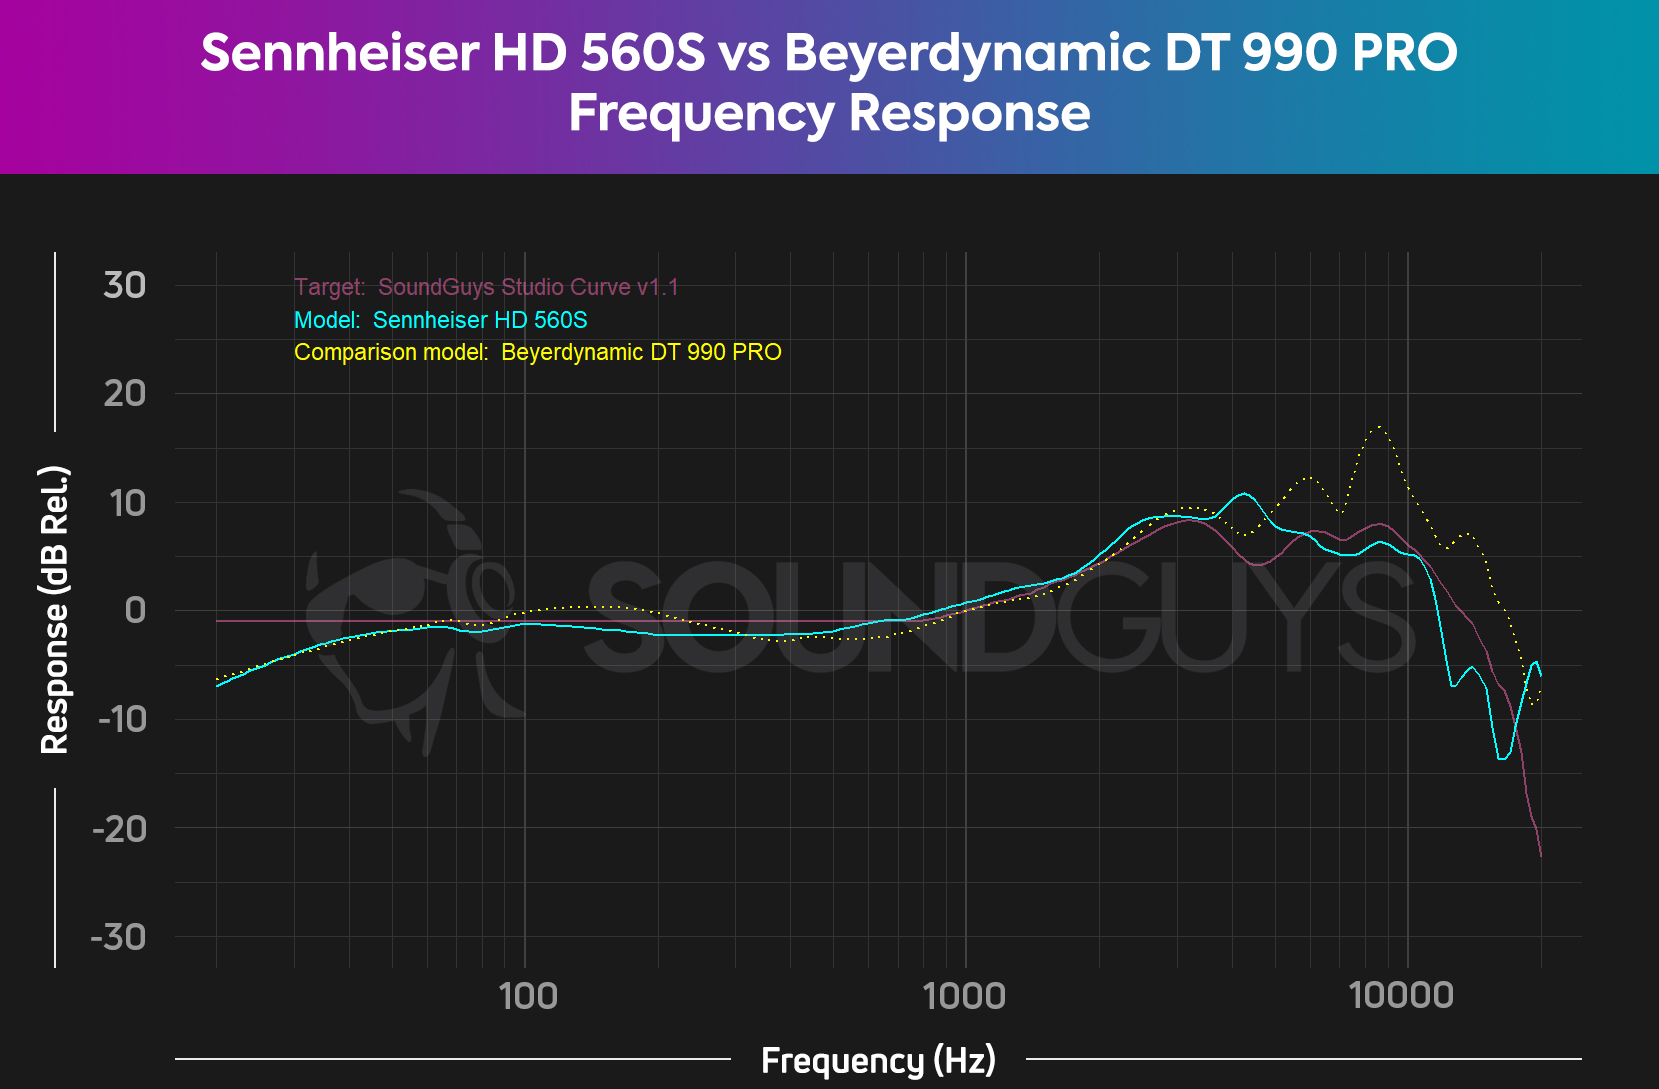 The Beyerdynamic DT 990 PRO emphasizes treble far more than the Sennheiser HD 560S.